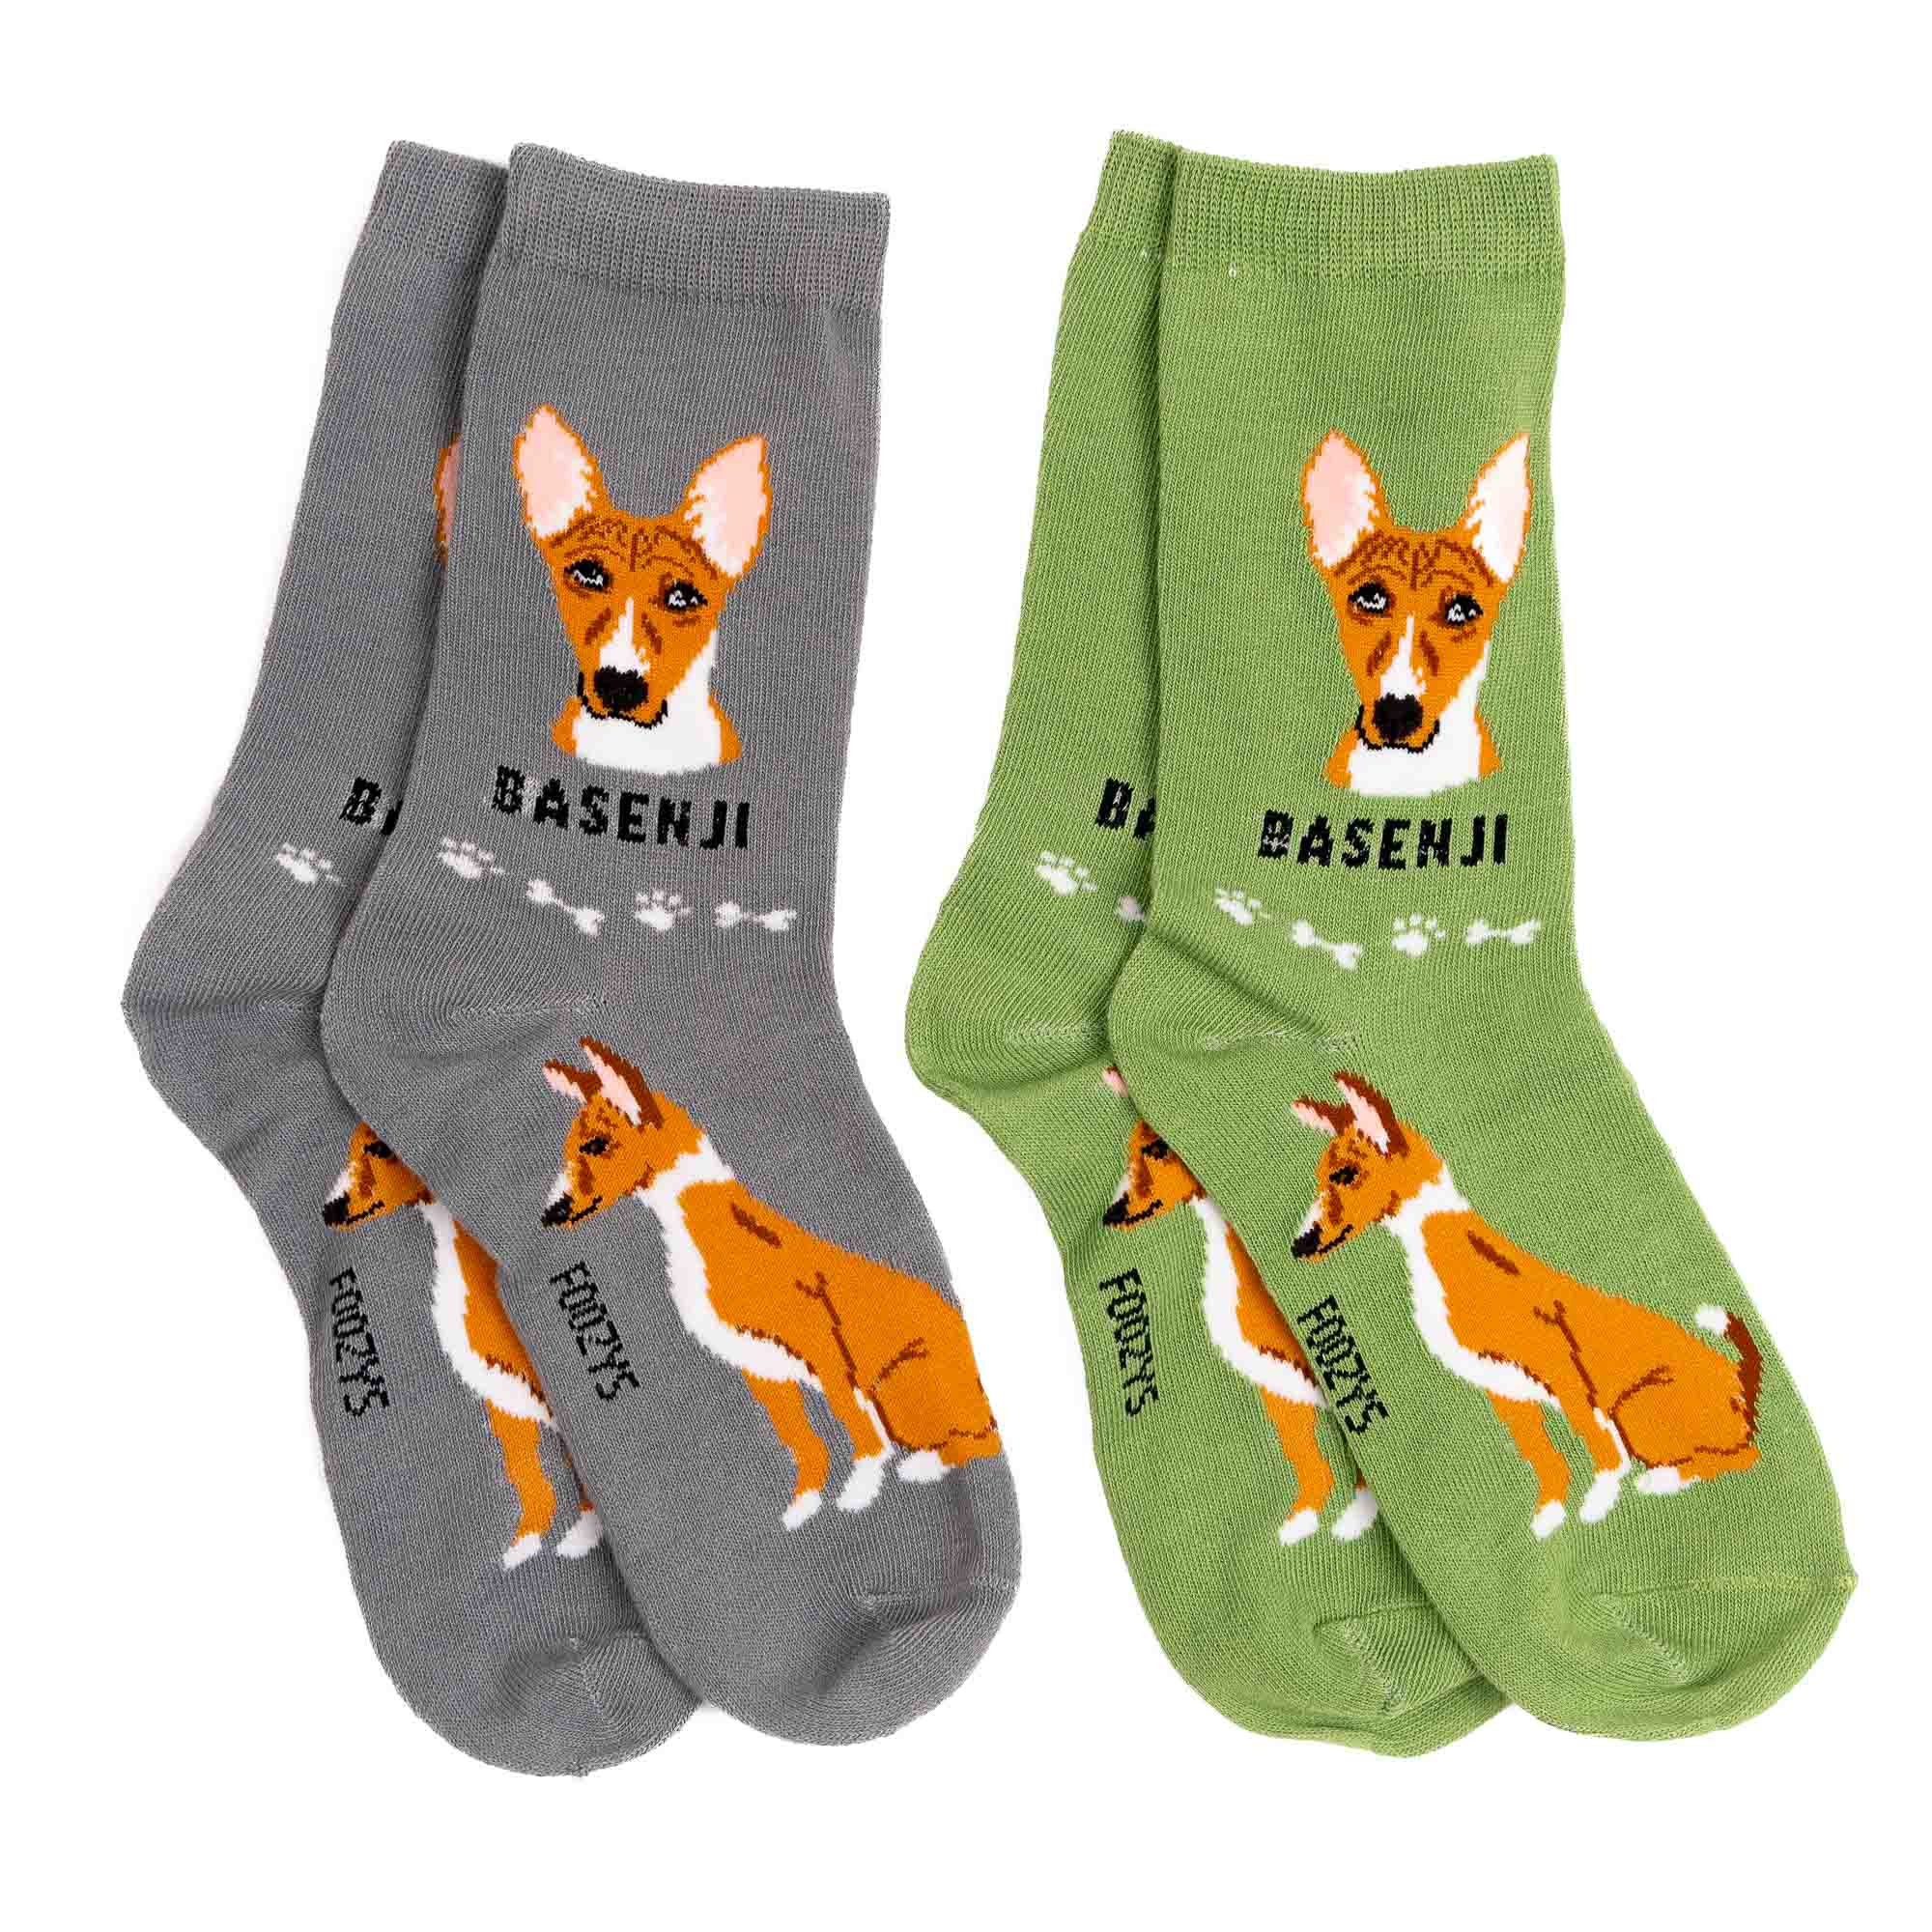 My Favorite Dog Breed Socks ❤️ Basenji Breed - 2 Set Collection